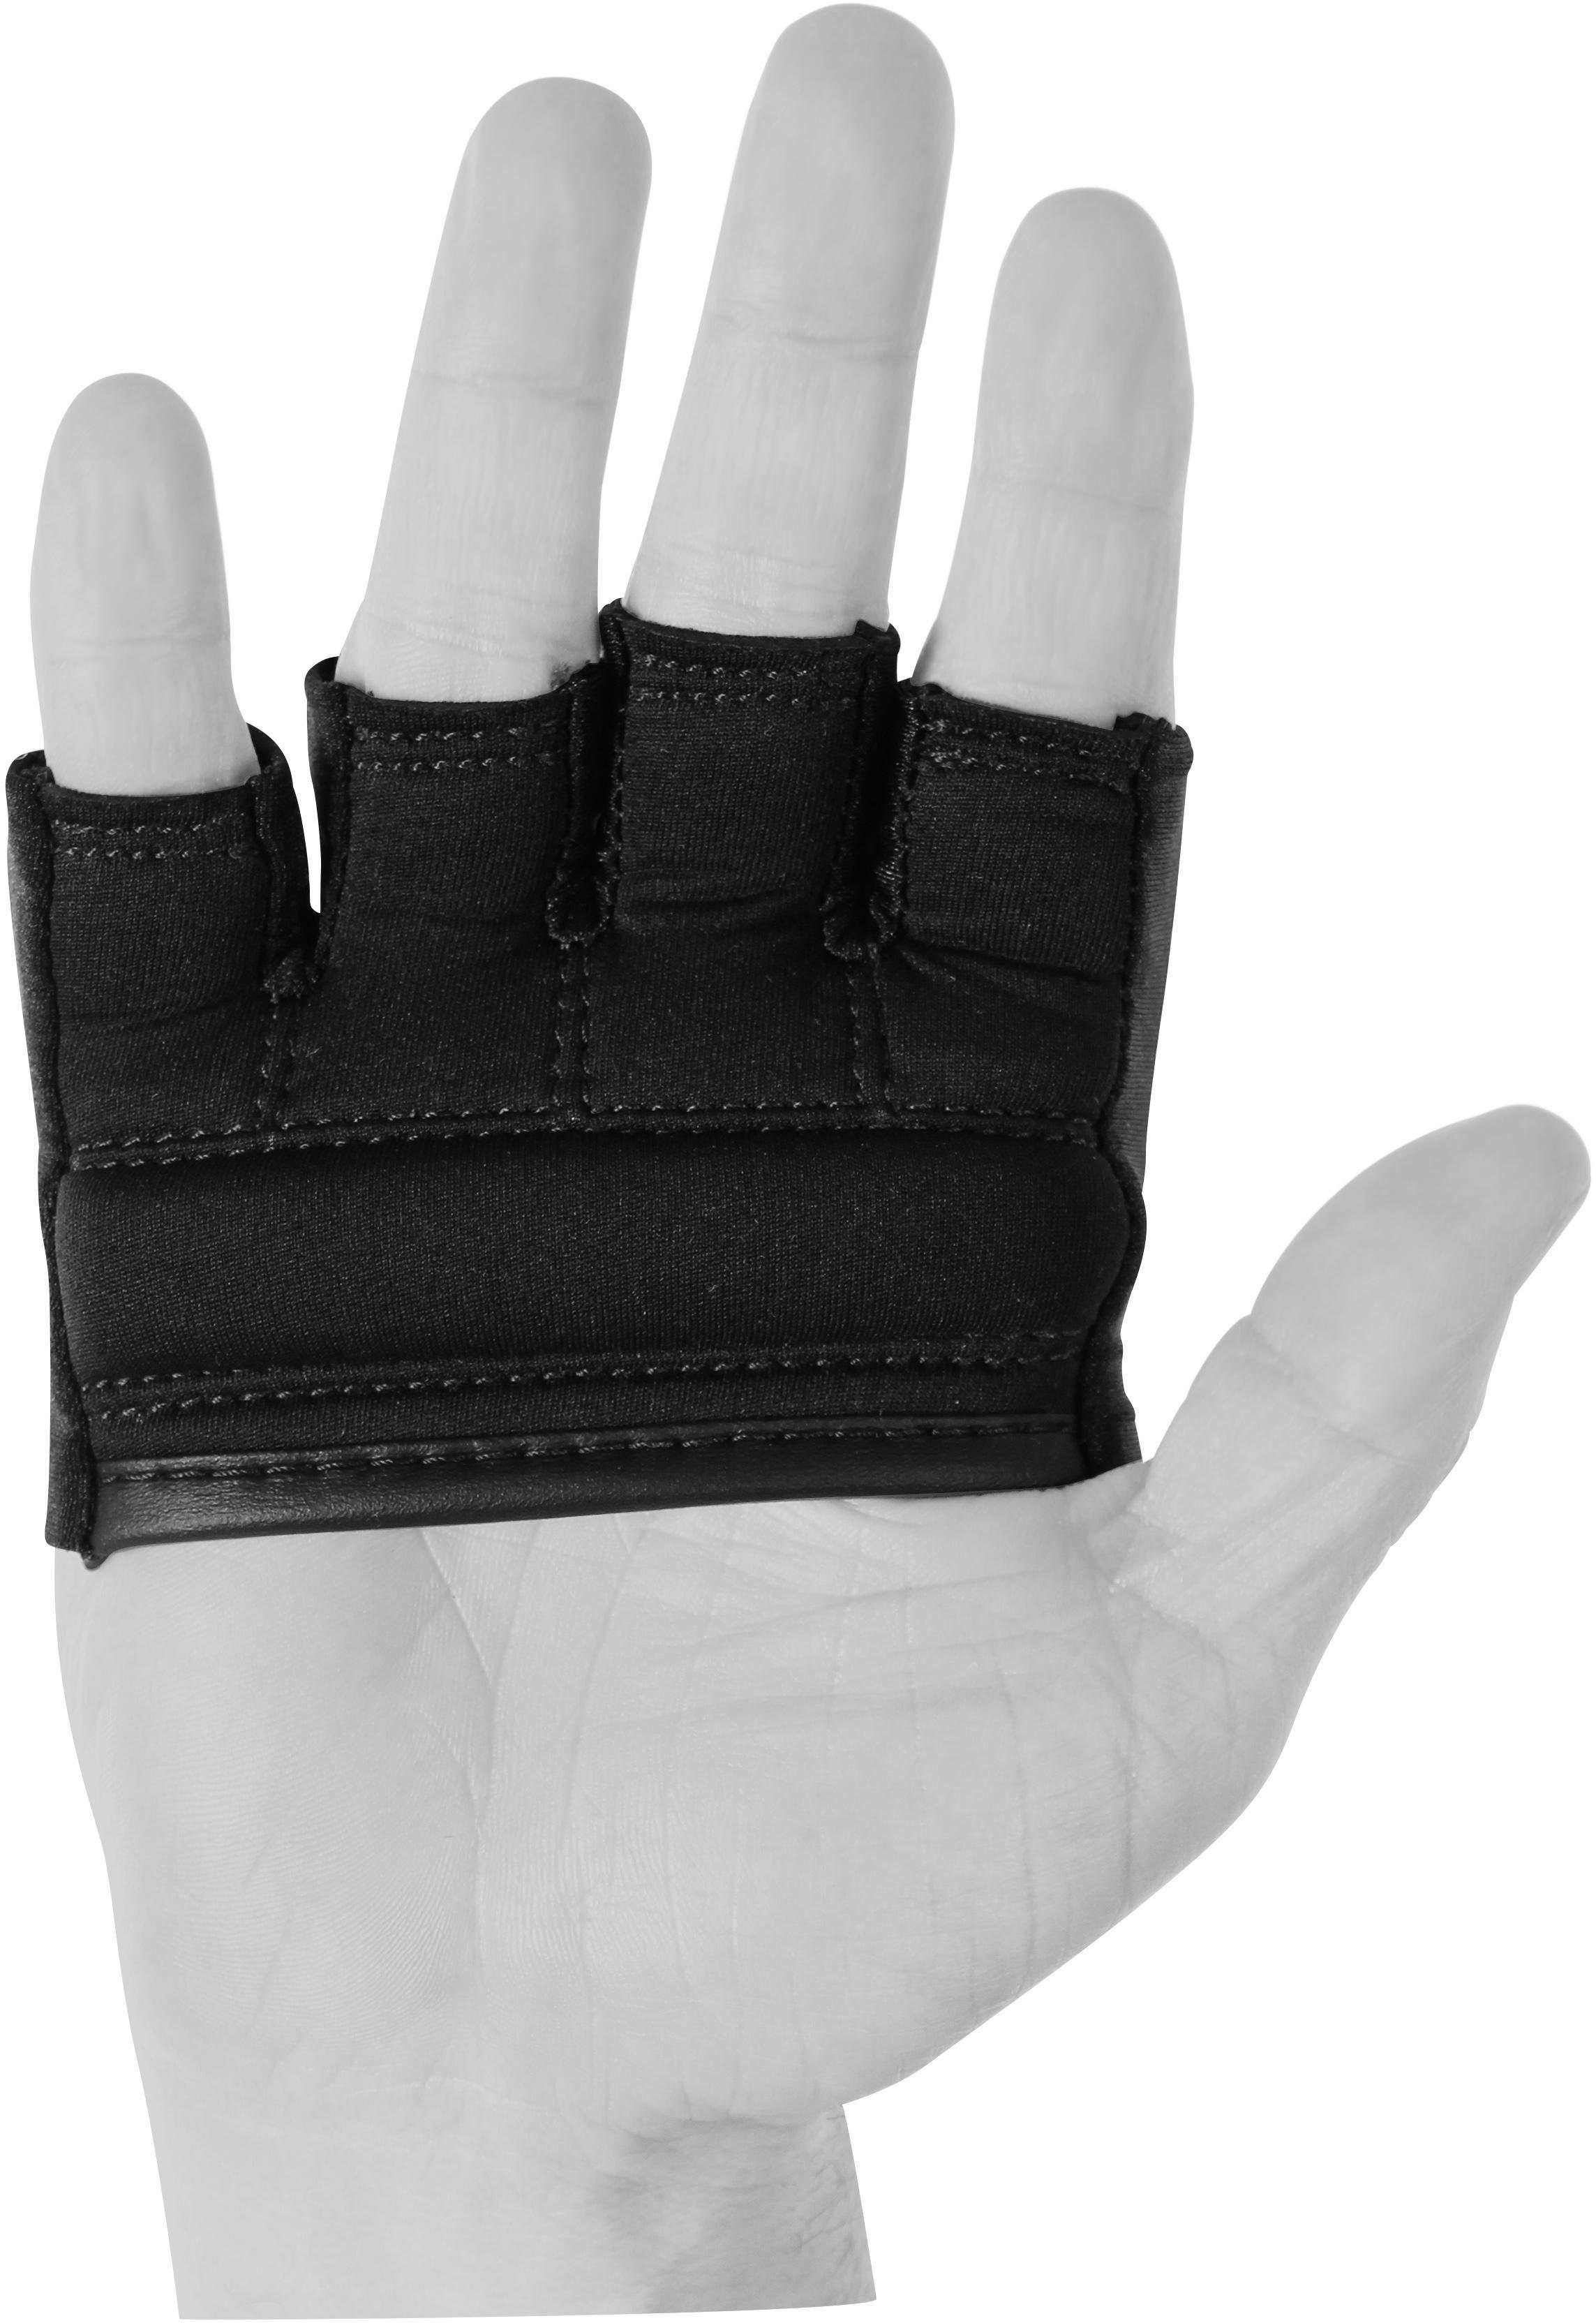 adidas Performance Punch-Handschuhe Knuckle Sleeve